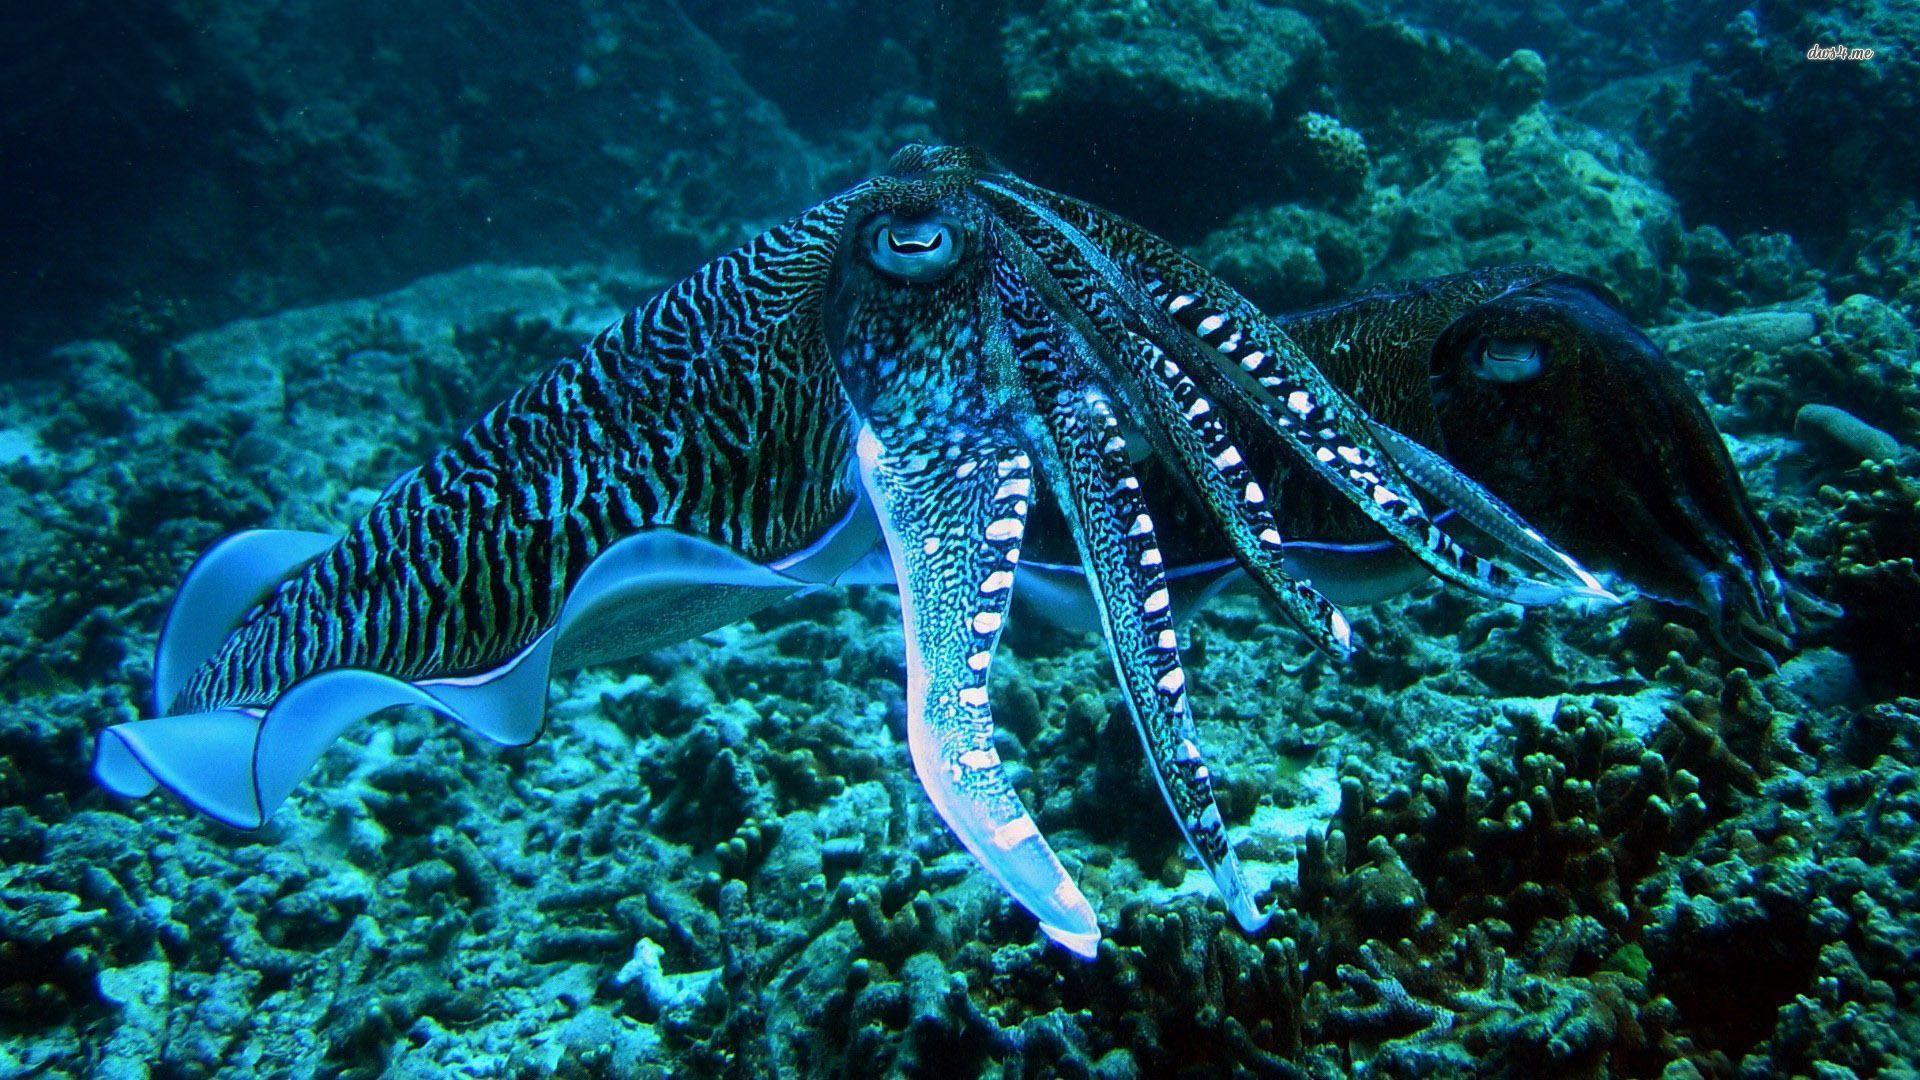 Octopus Wallpaper. Steampunk Octopus